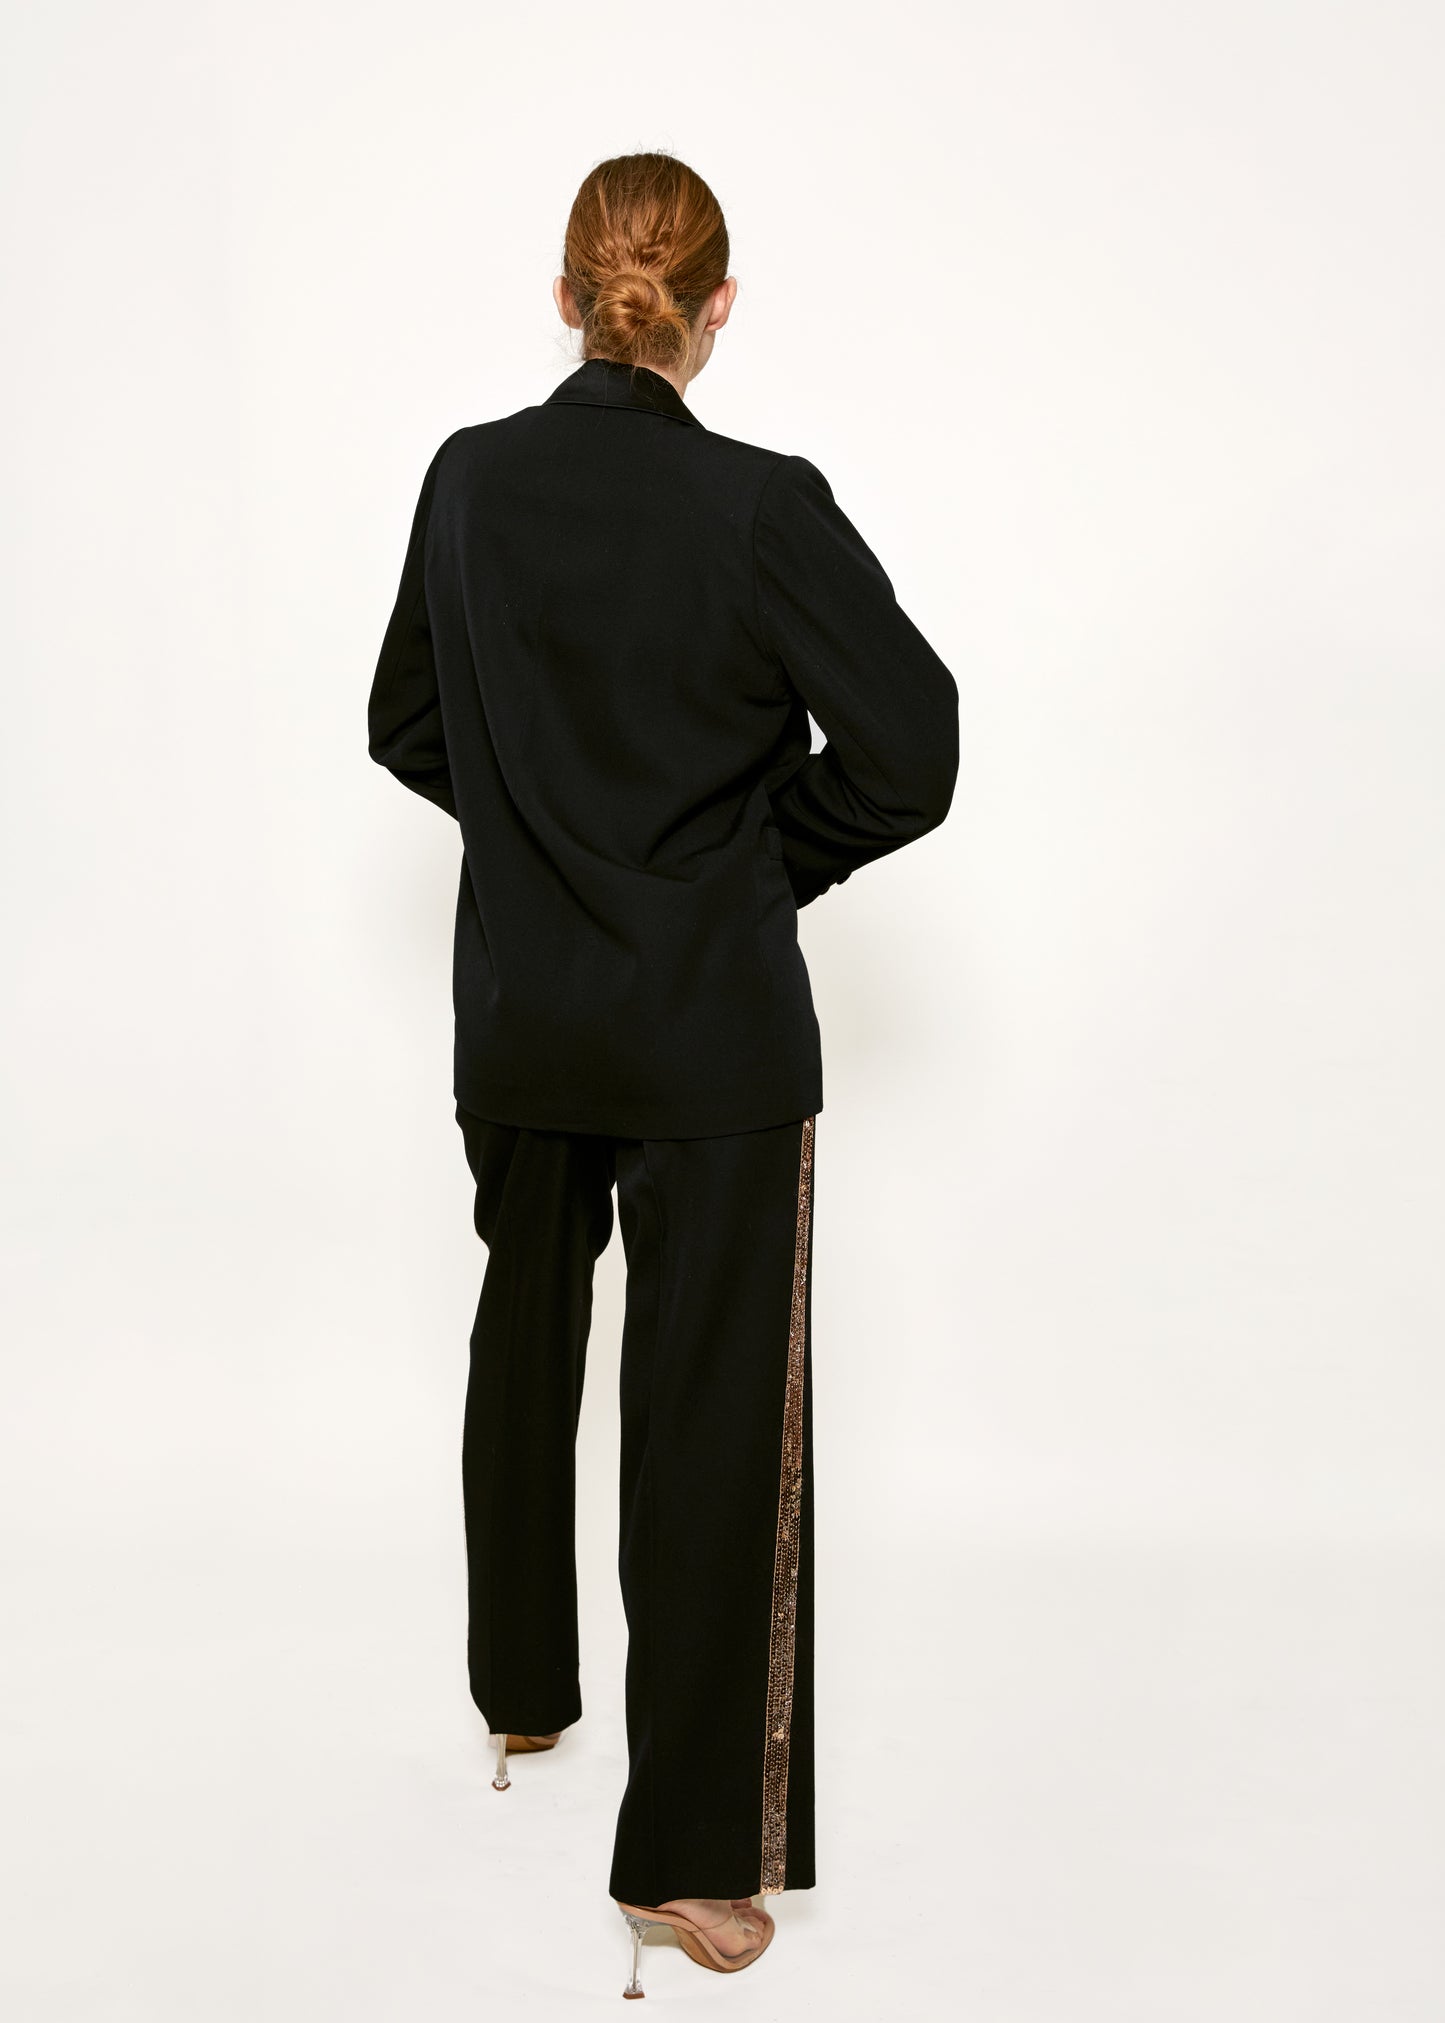 Yves Saint Laurent Tuxedo Blazer with Gold Sequin Tuxedo Stripe Pants